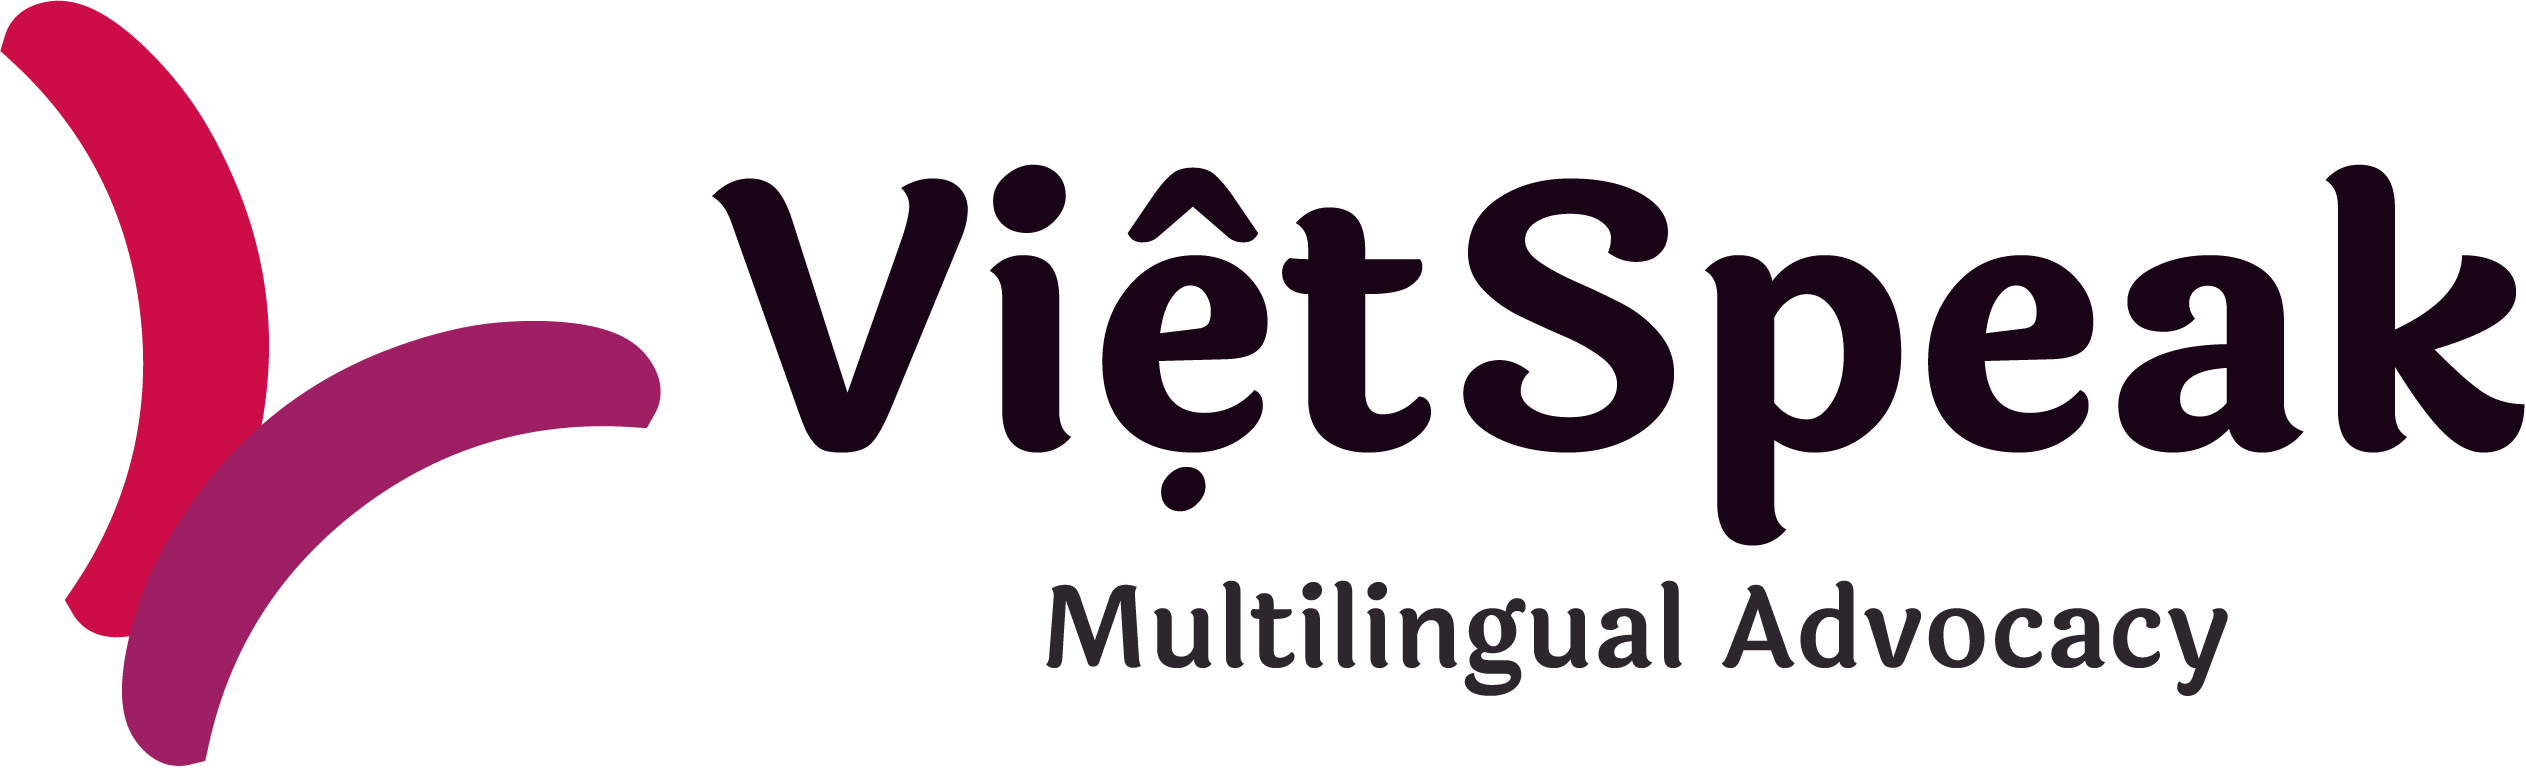 ViệtSpeak – Multilingual Advocacy